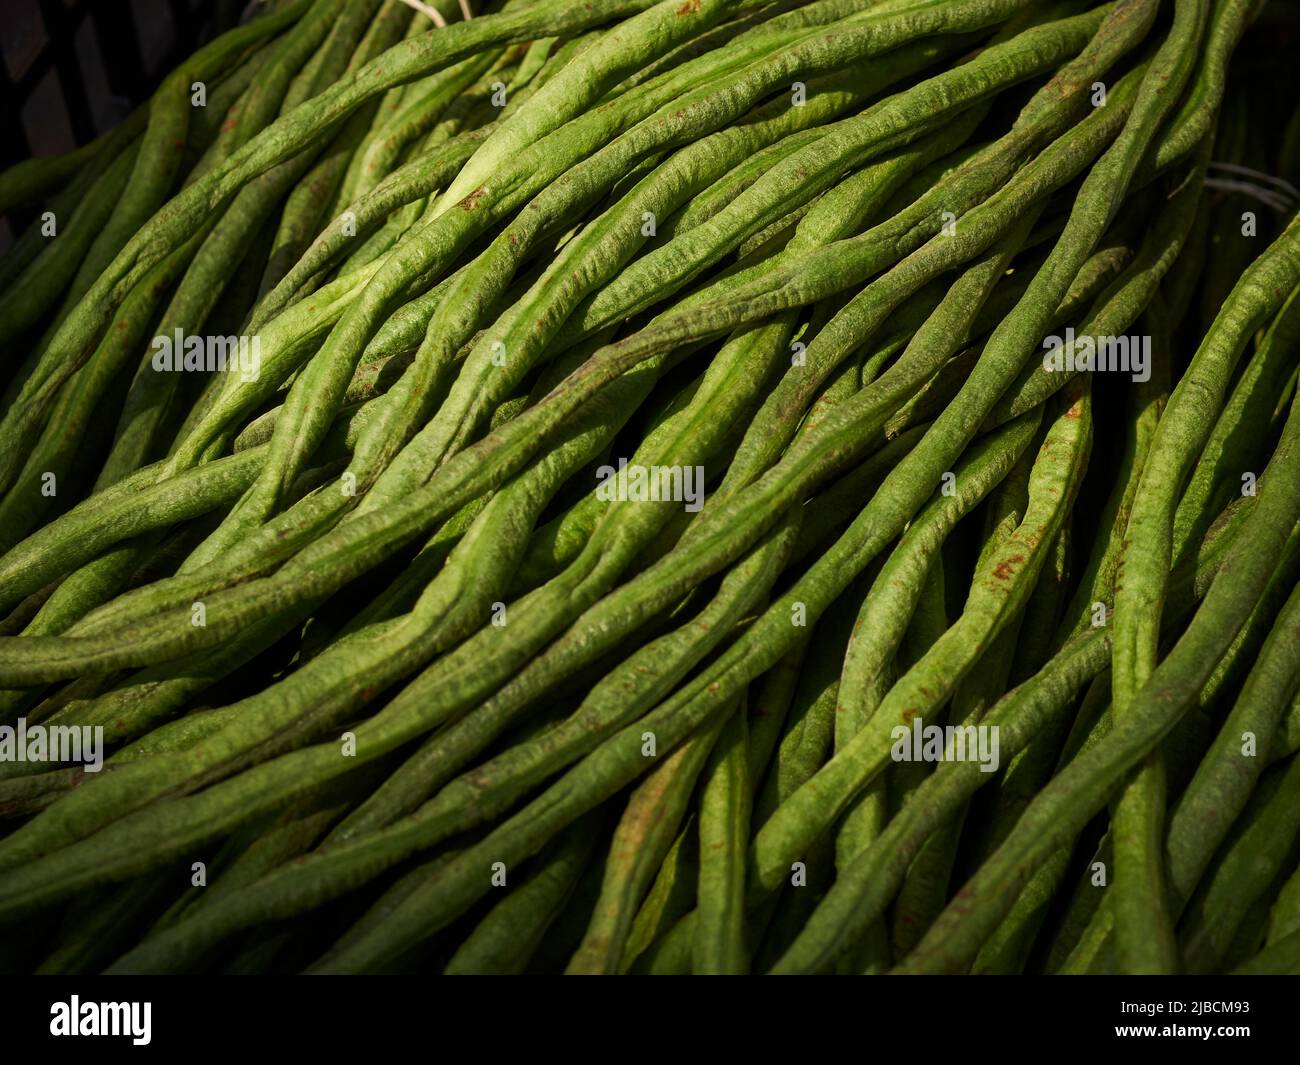 A sidewalk display of fresh, whole long beans. Little Guyana, Liberty Avenue, Queens, New York, USA Stock Photo